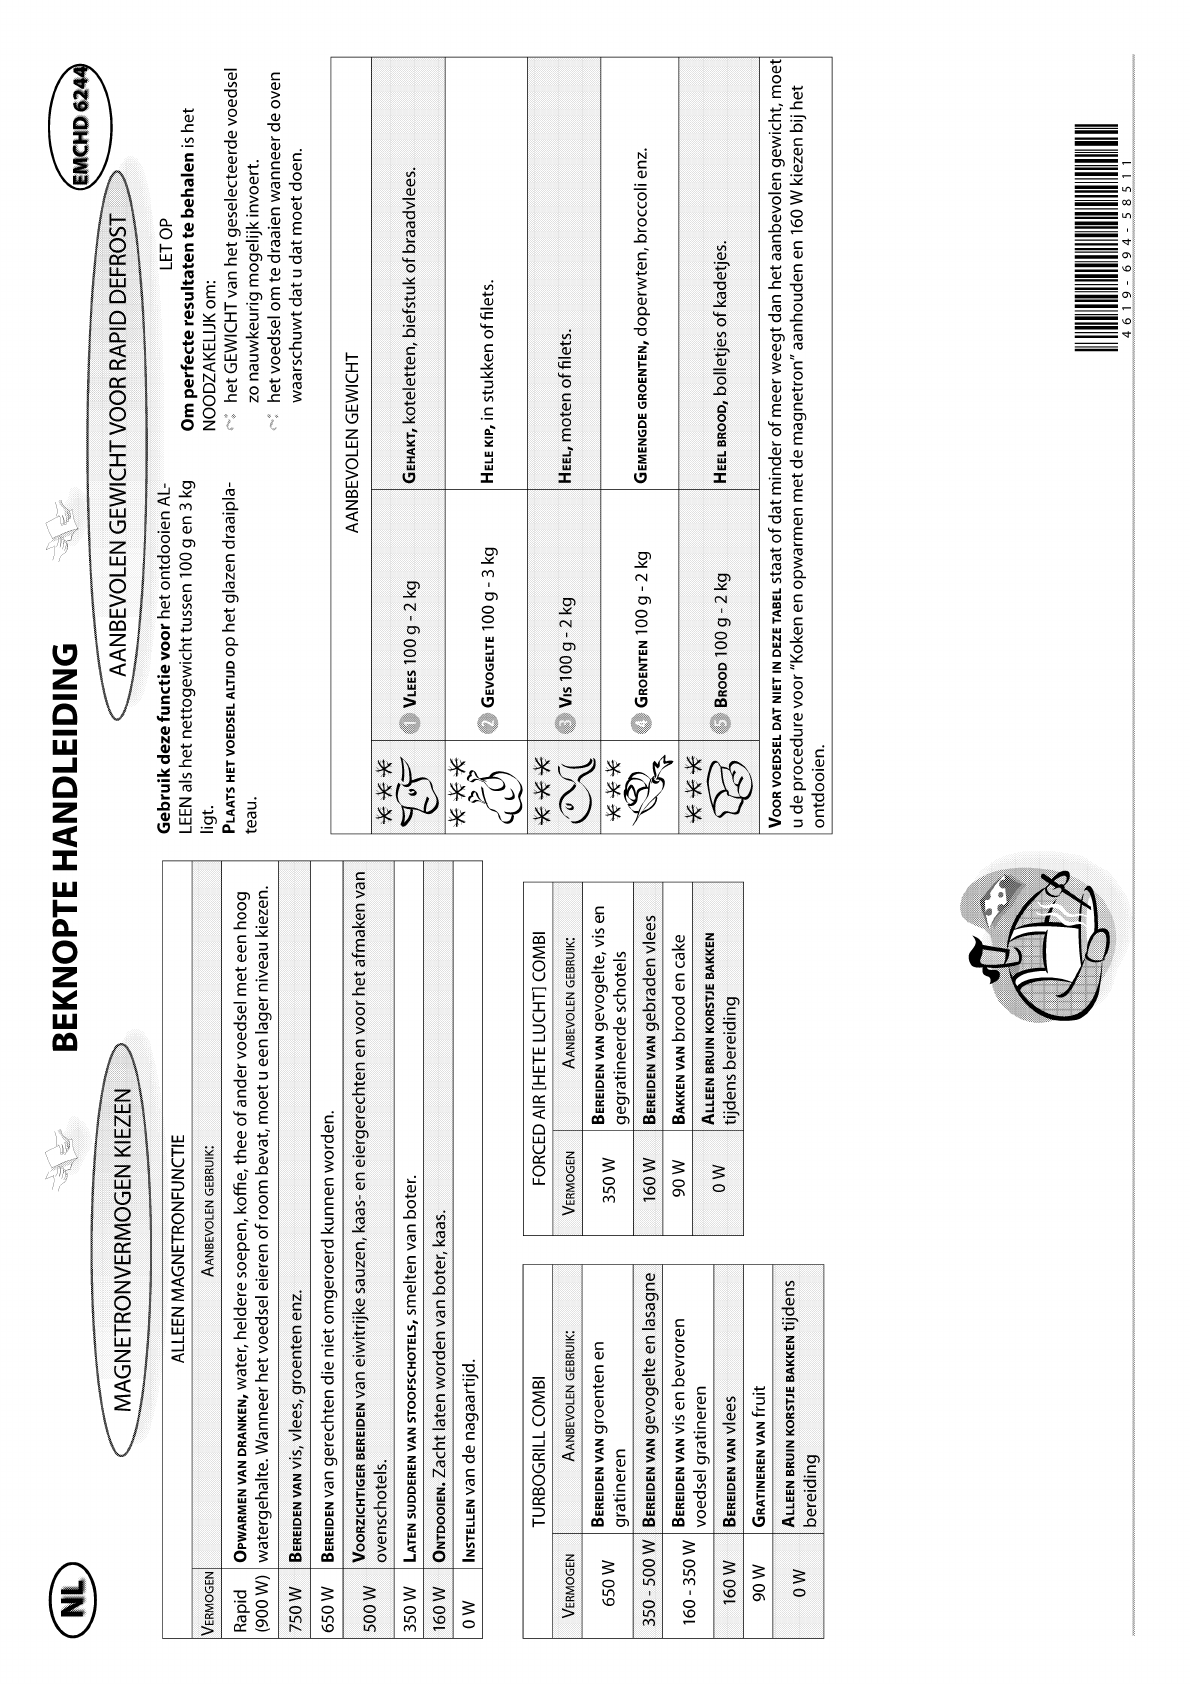 Omtrek Uitgaan Beginner Handleiding Bauknecht EMCHD 6244 (pagina 1 van 2) (Nederlands)